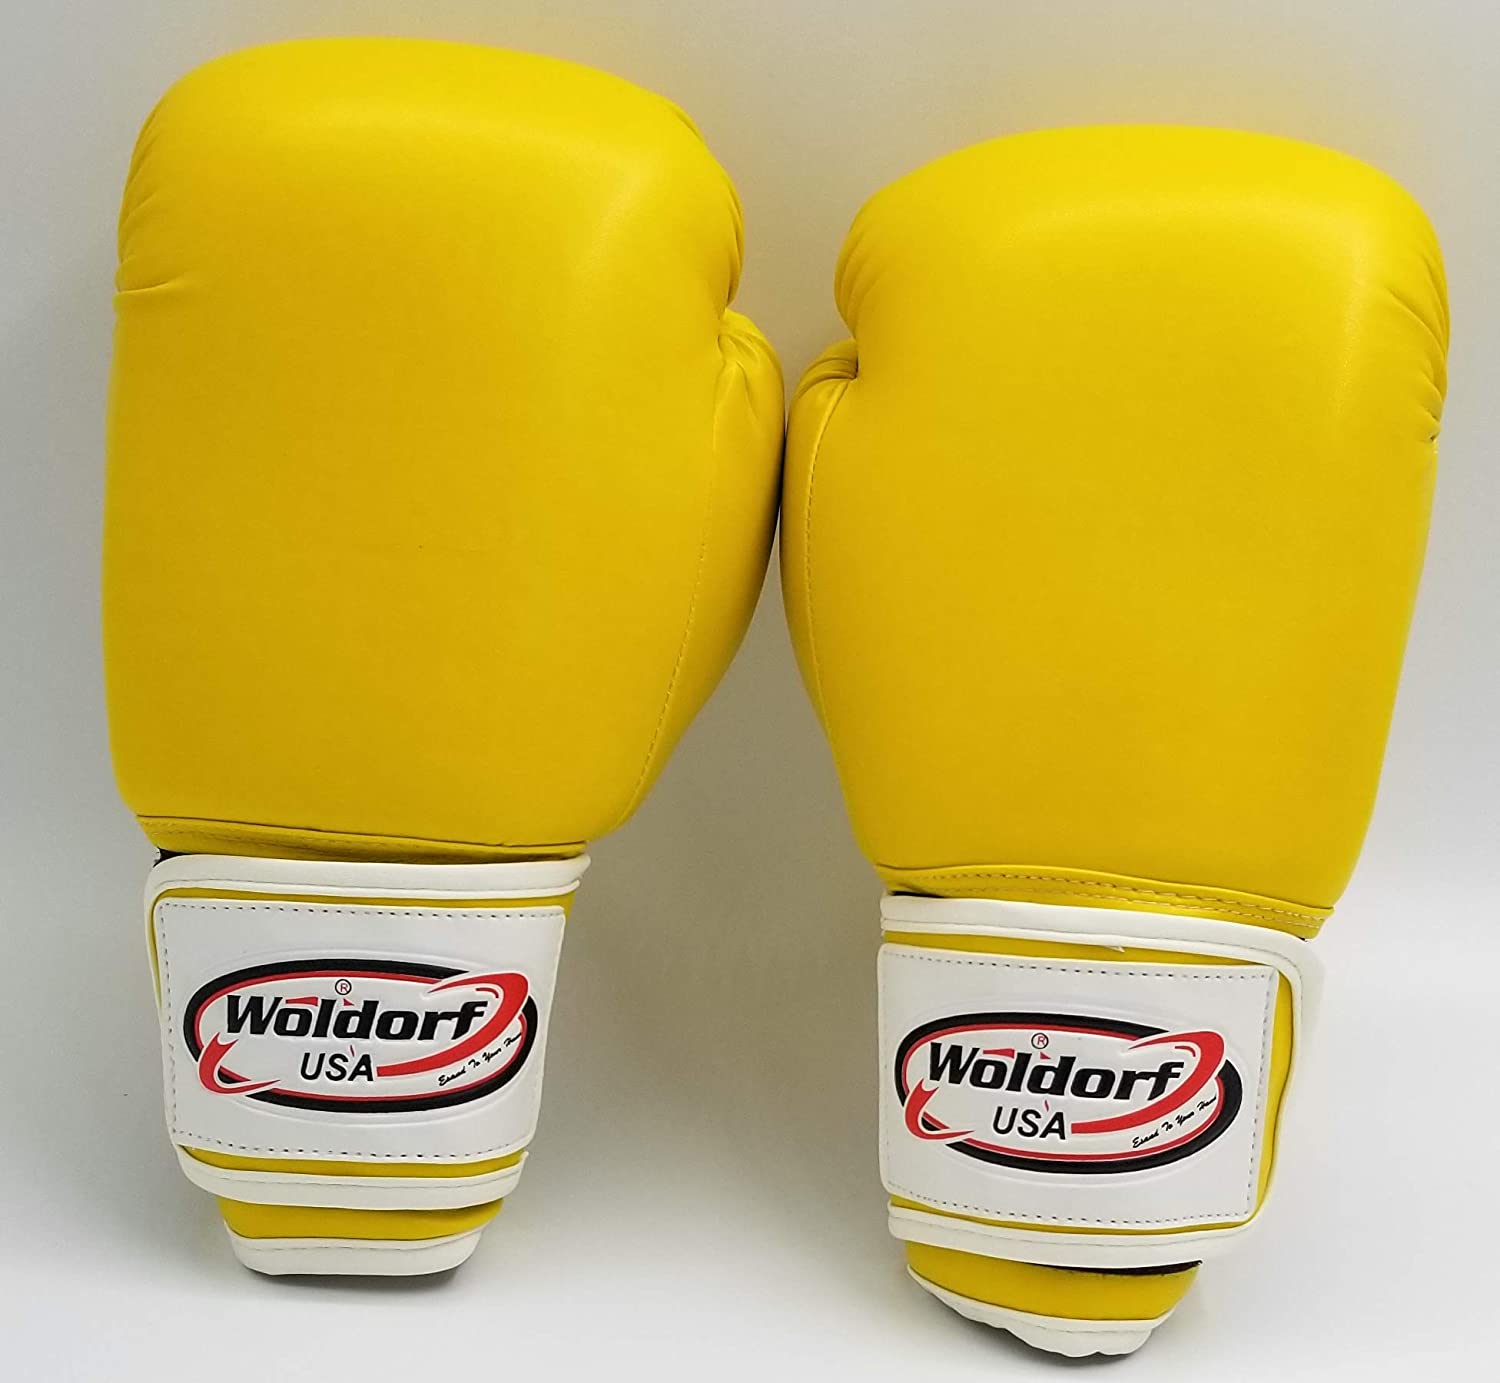 Woldorf USA Cheetah Boxing Gloves 